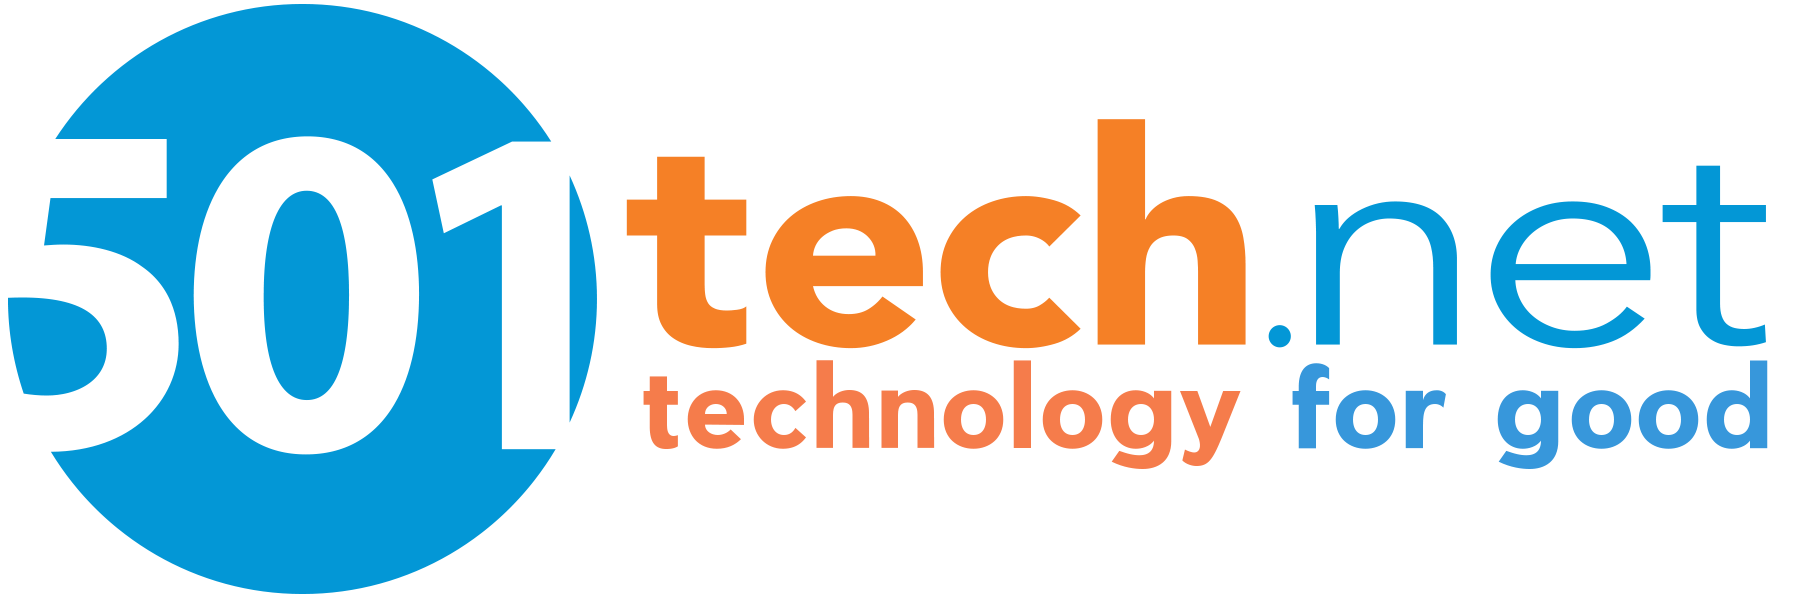 501TechNet Logo New 2013AUG